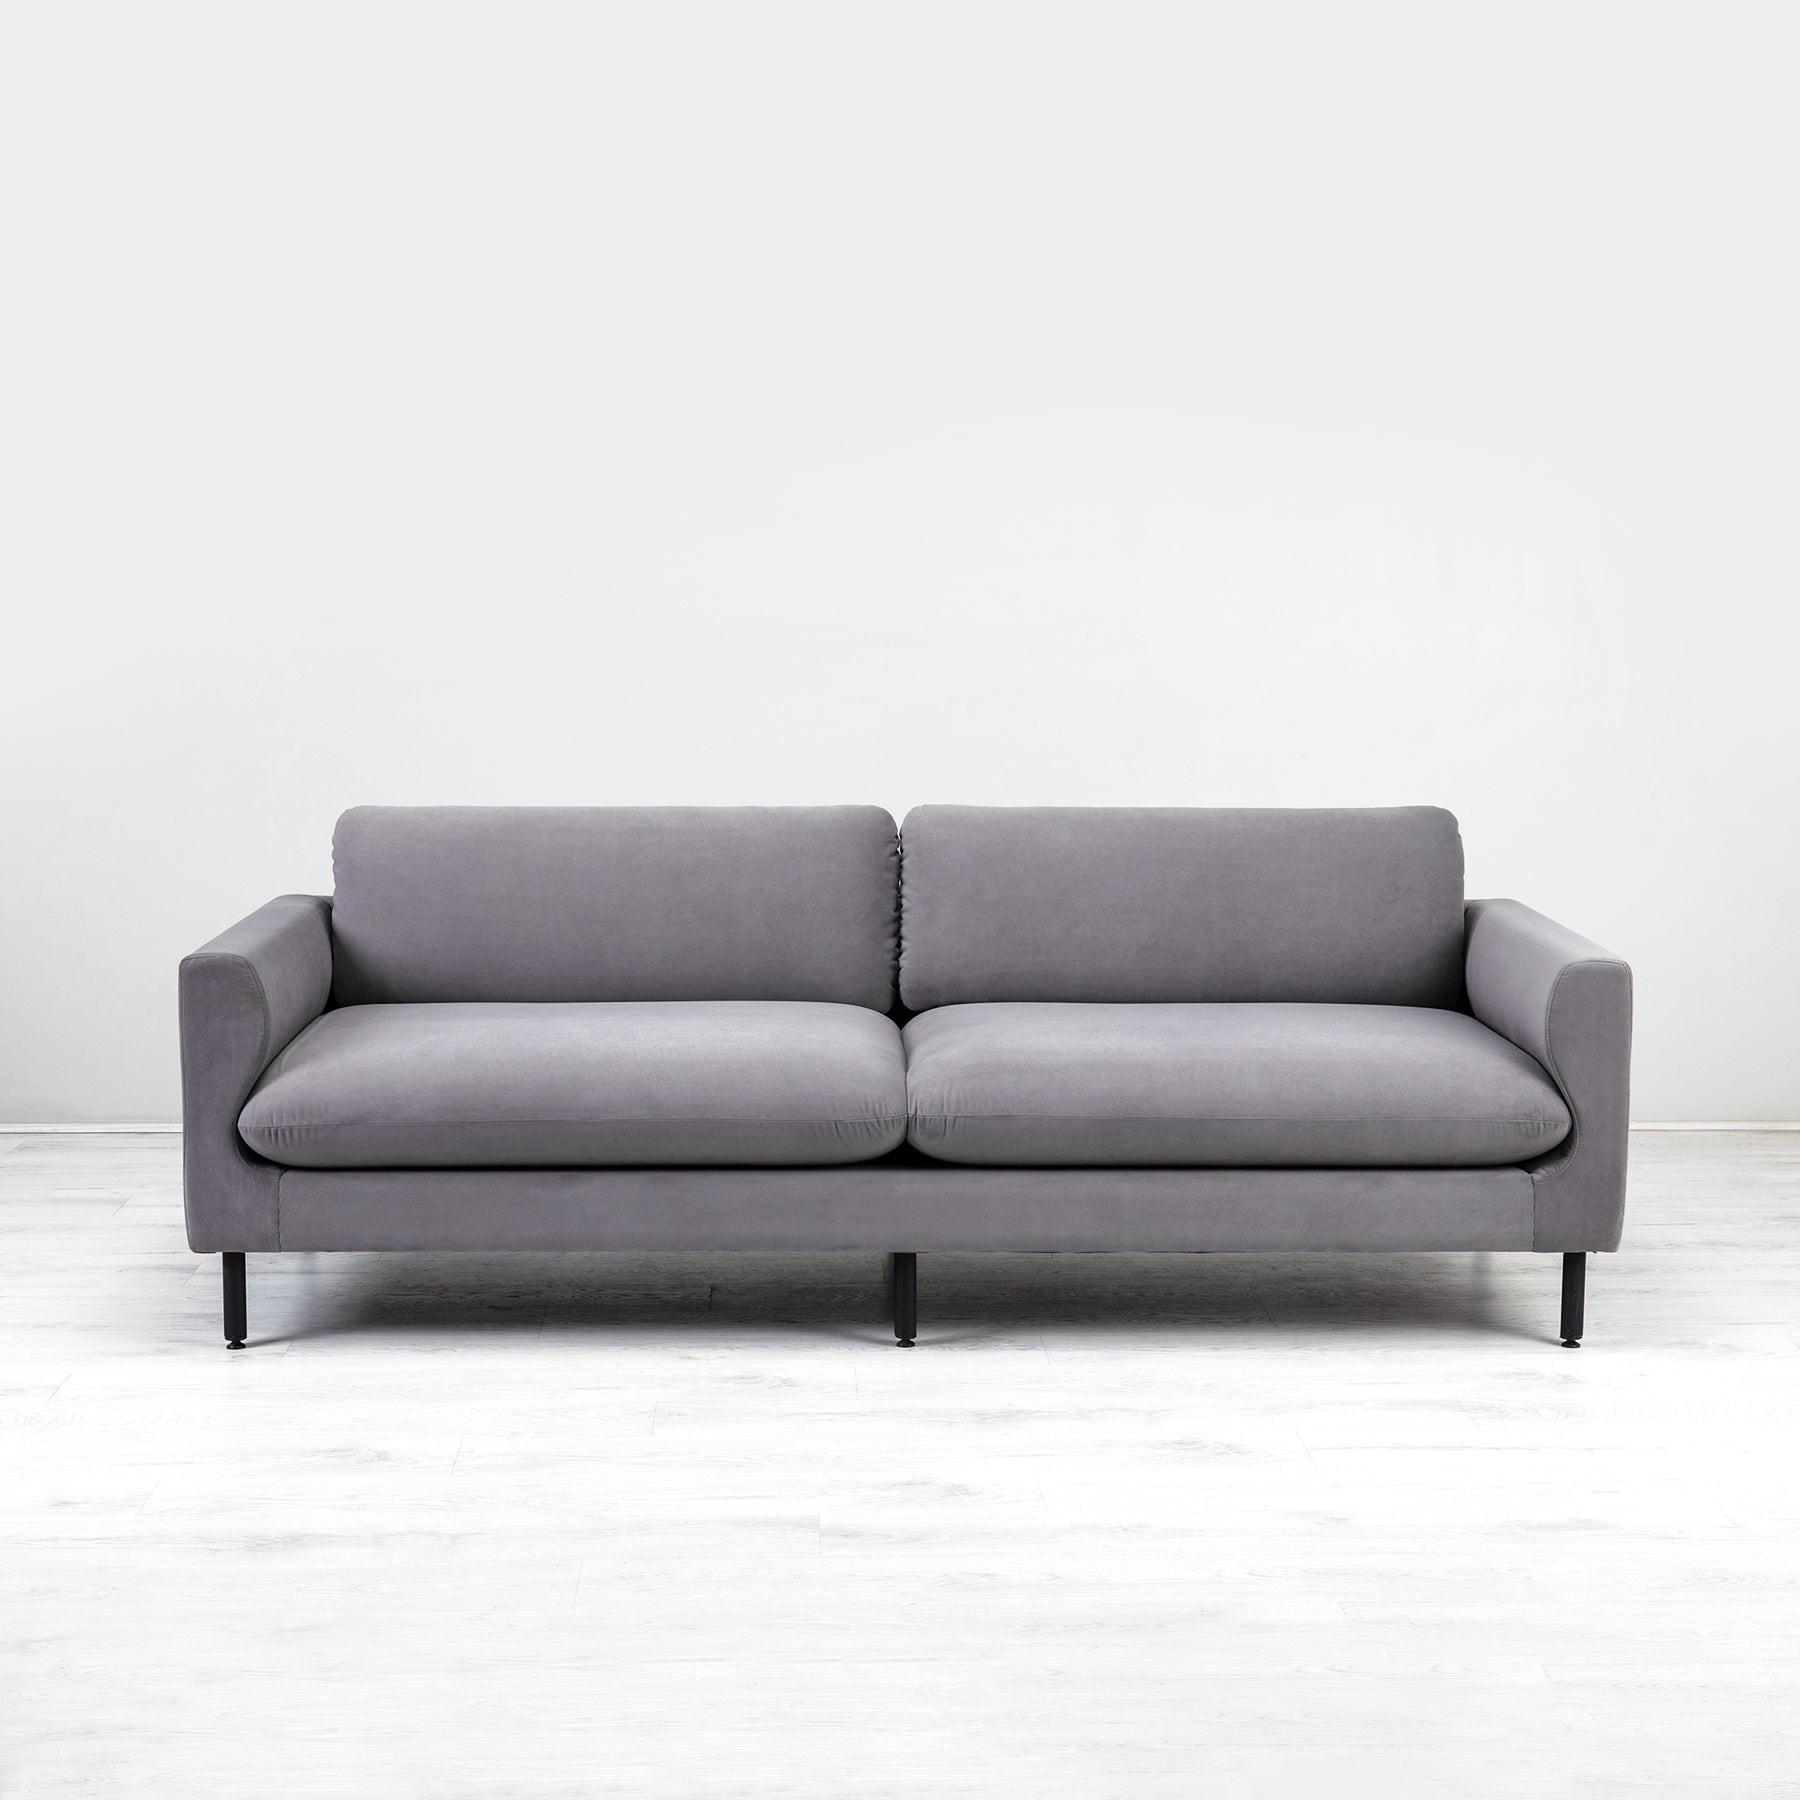 Lap Sofa - 3 Seater